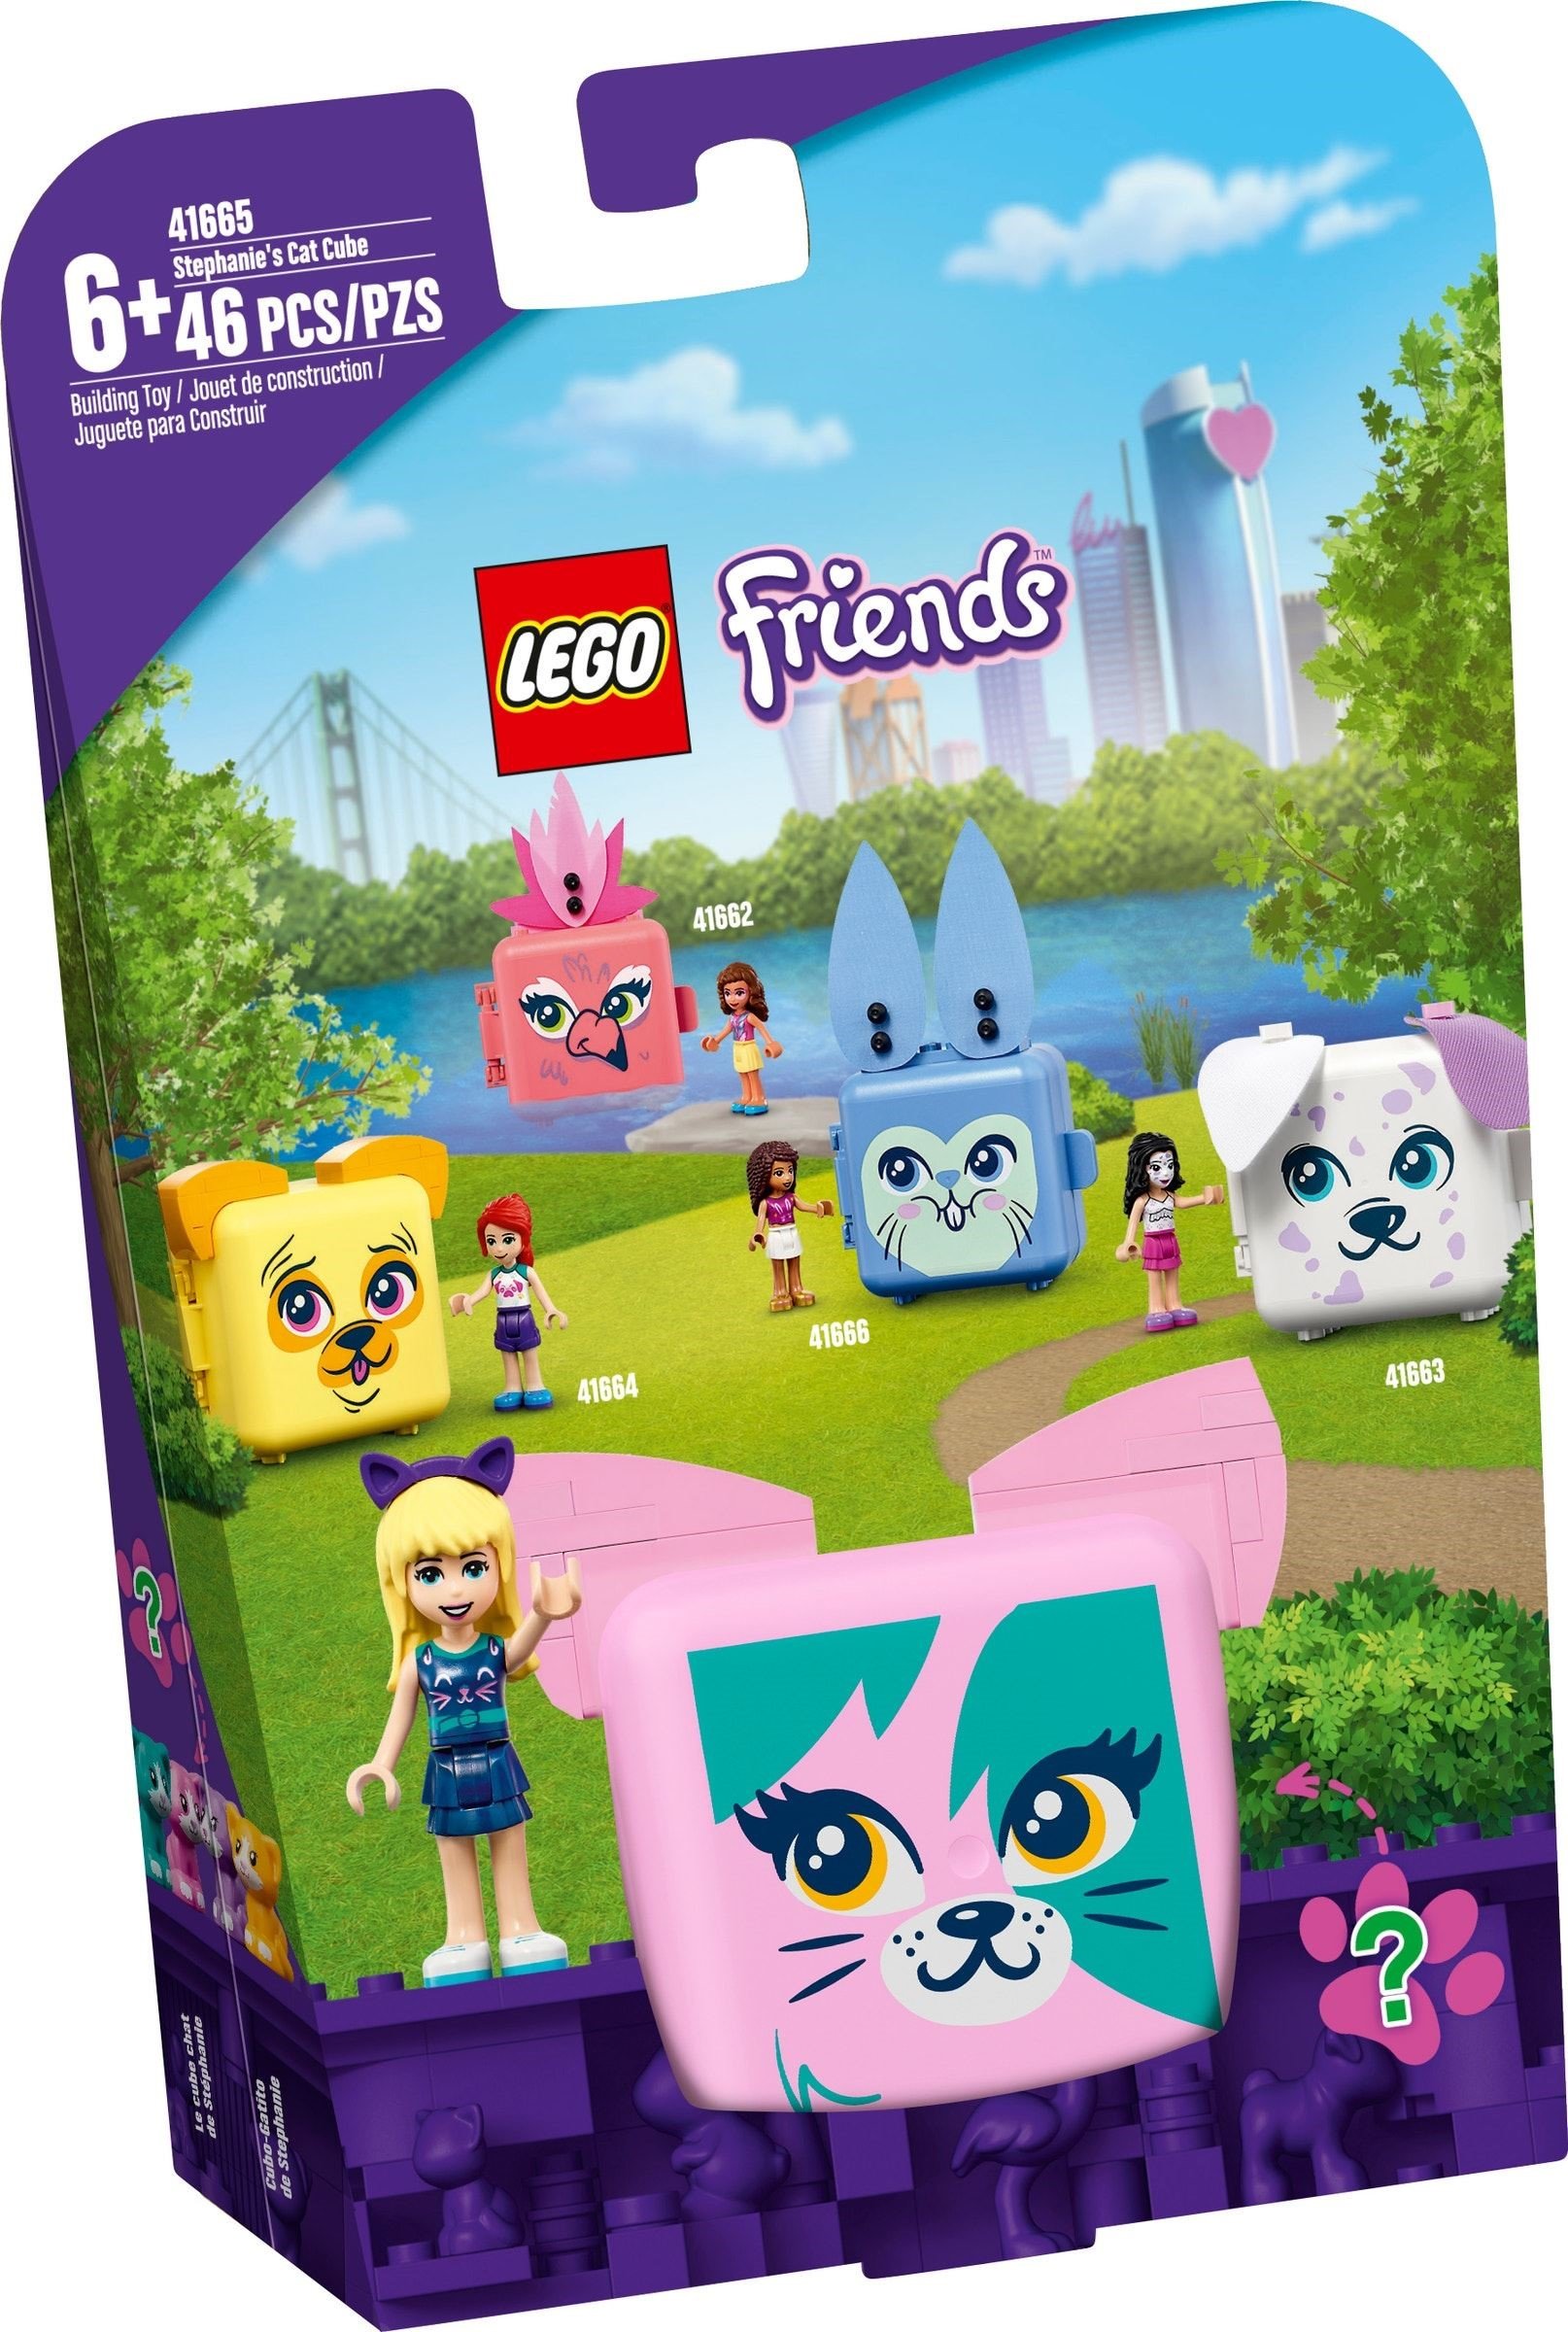 LEGO Friends - Stephanie's Cat Cube (41665)